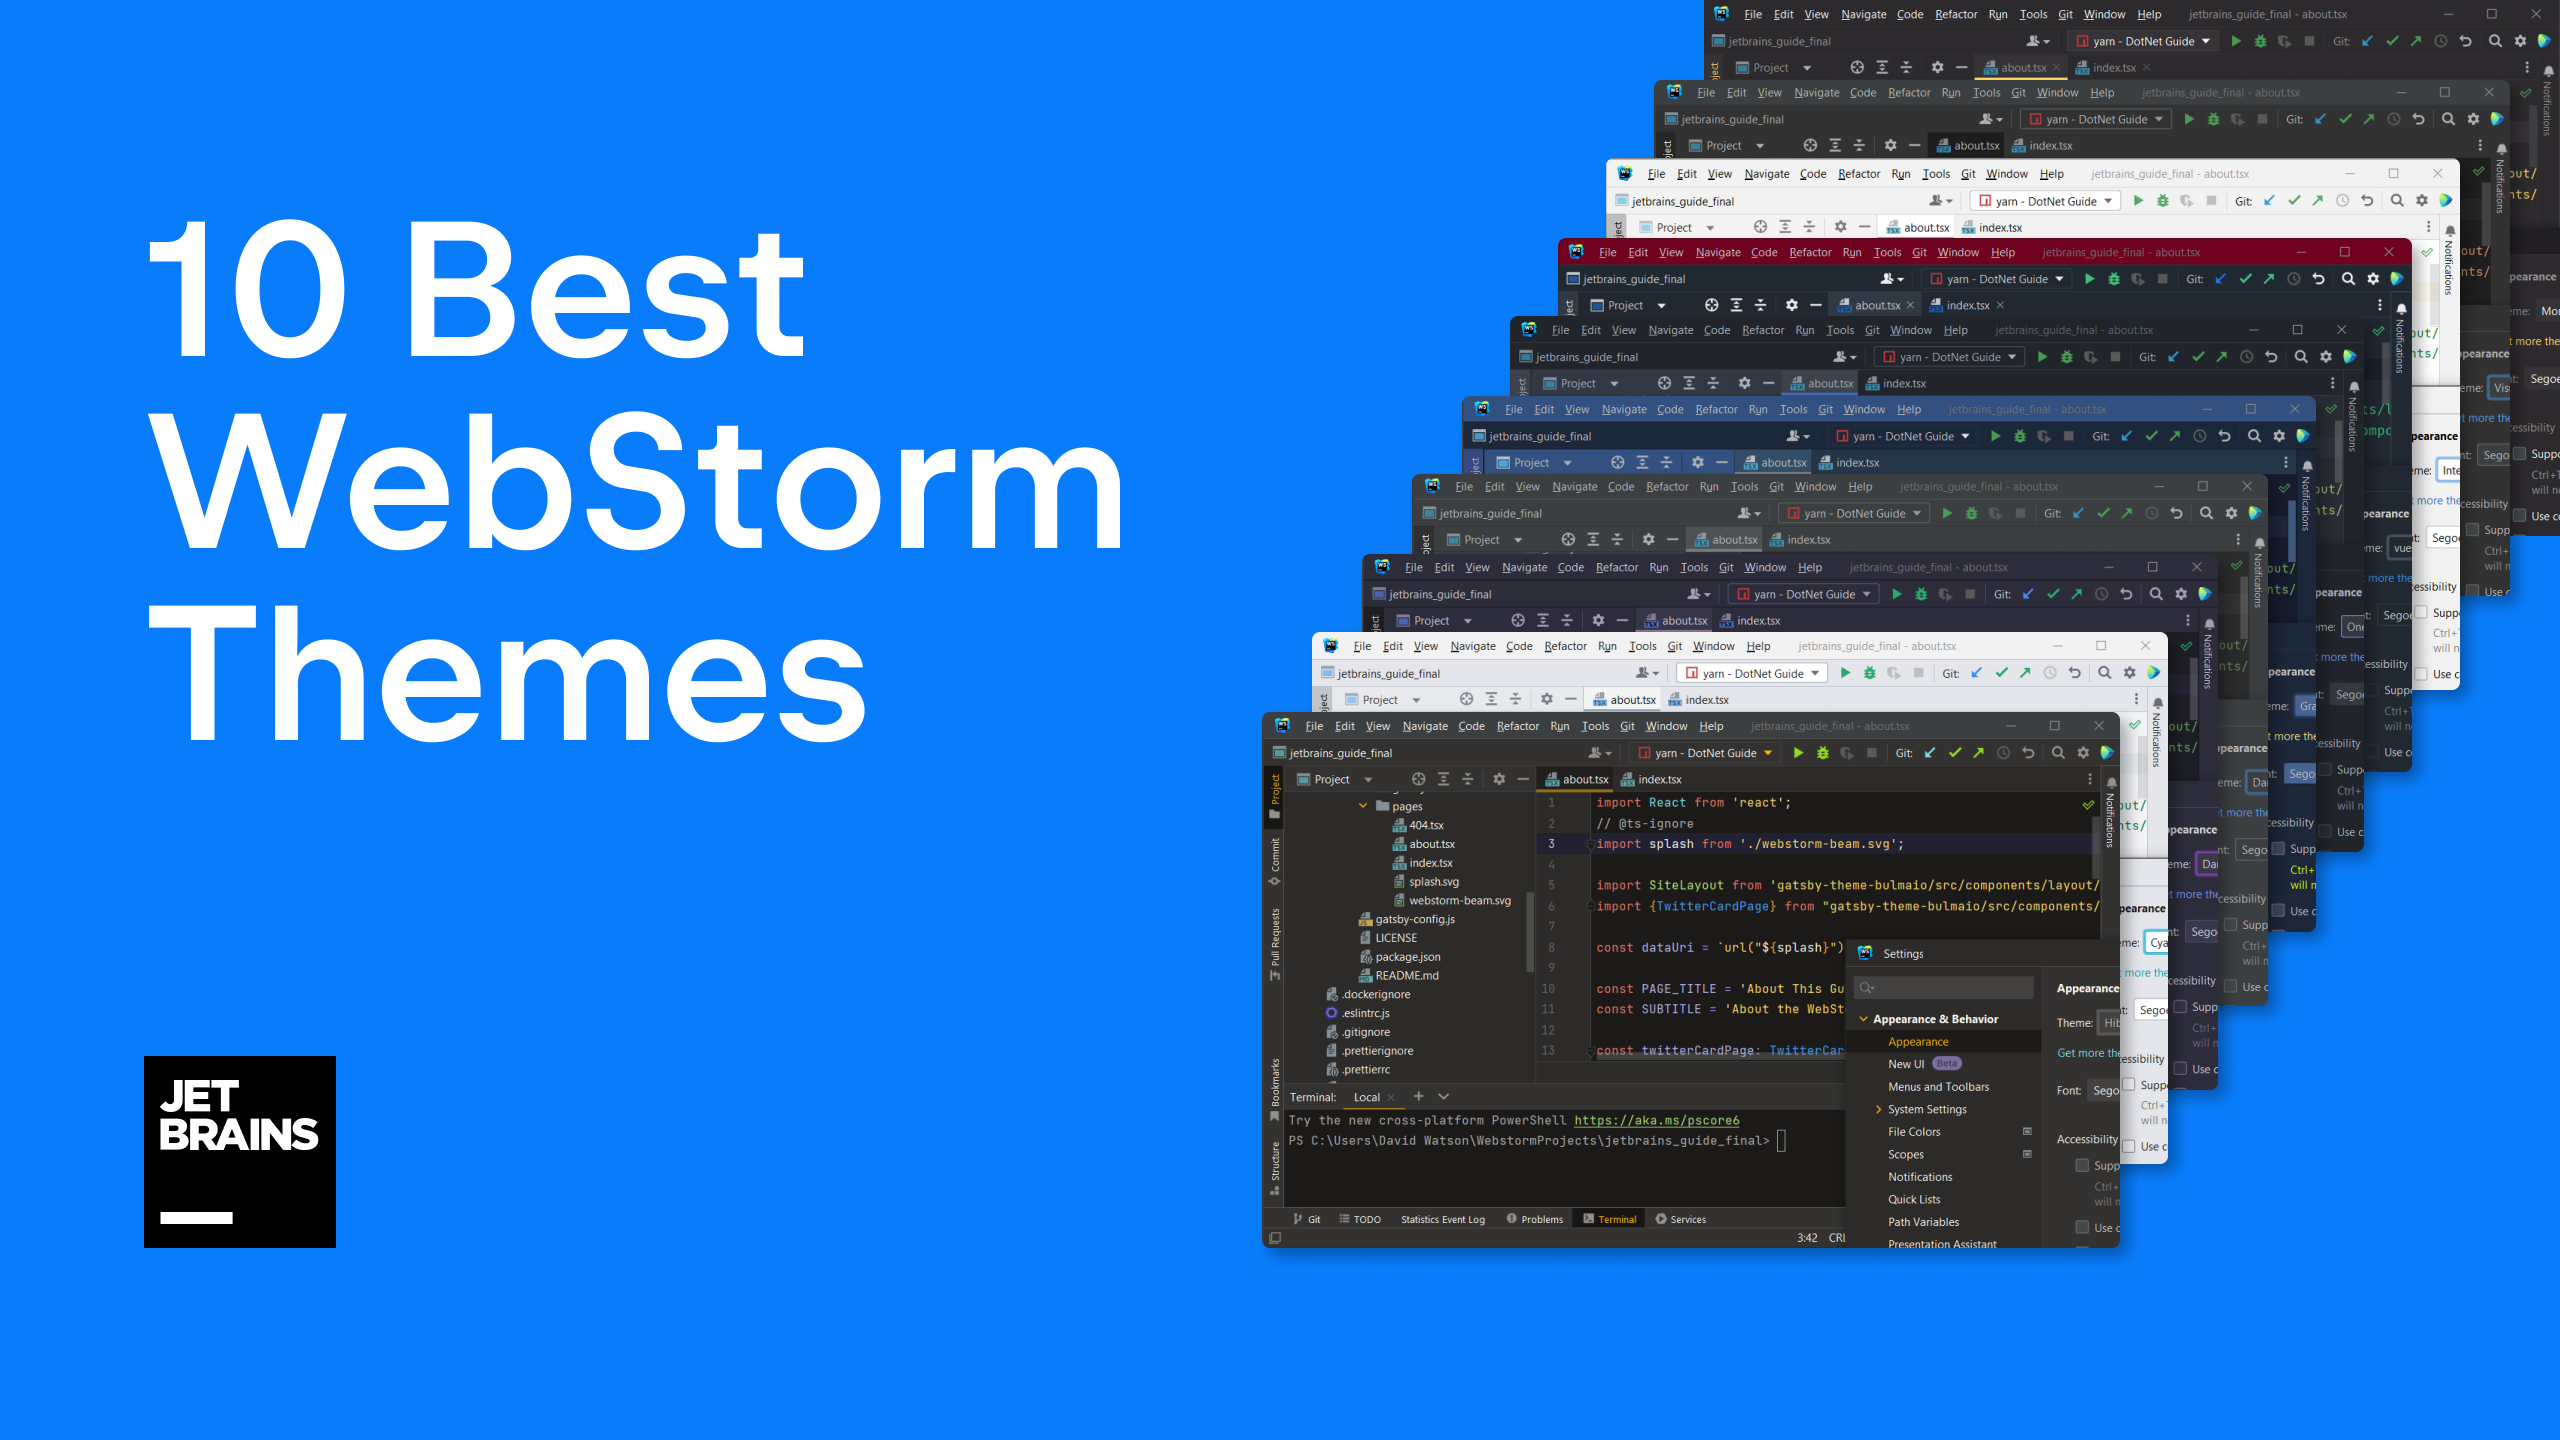 10 Best Webstorm Themes | The Webstorm Blog